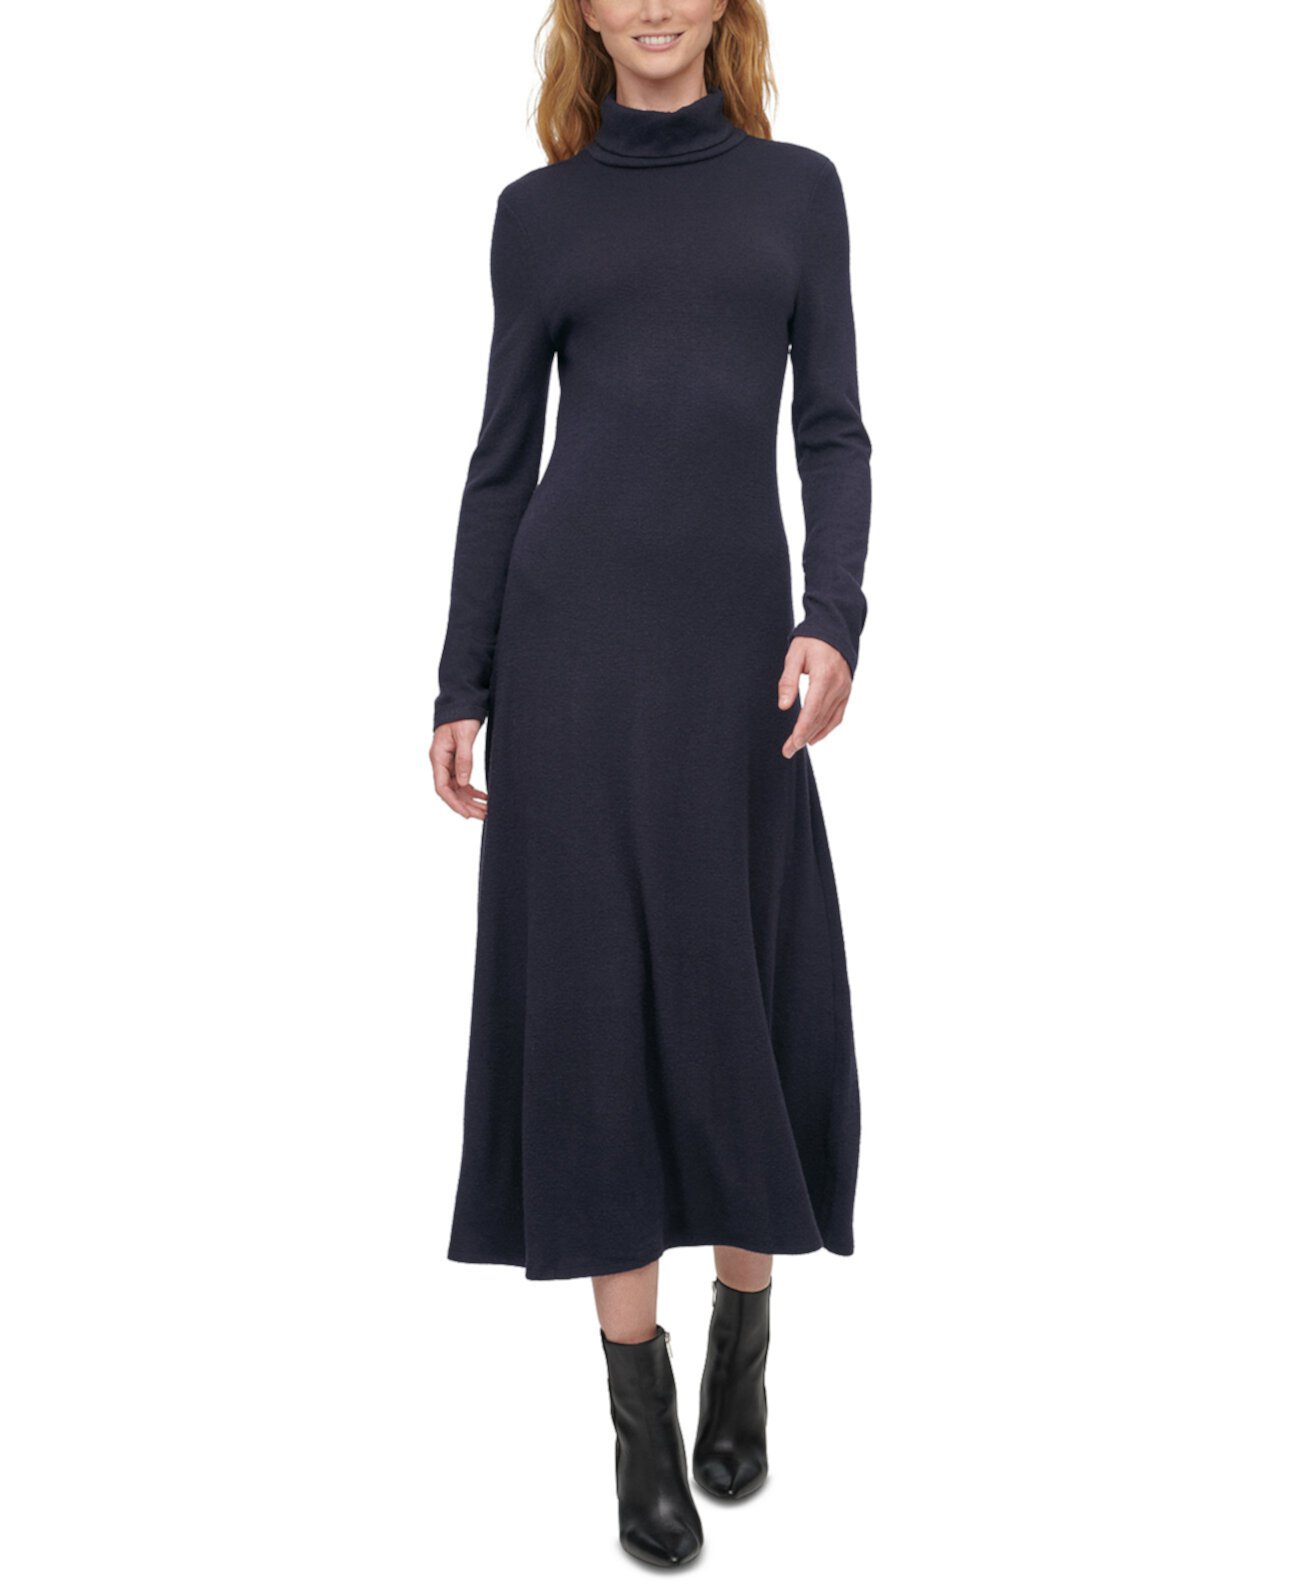 Solid Turtleneck Knit Dress DKNY